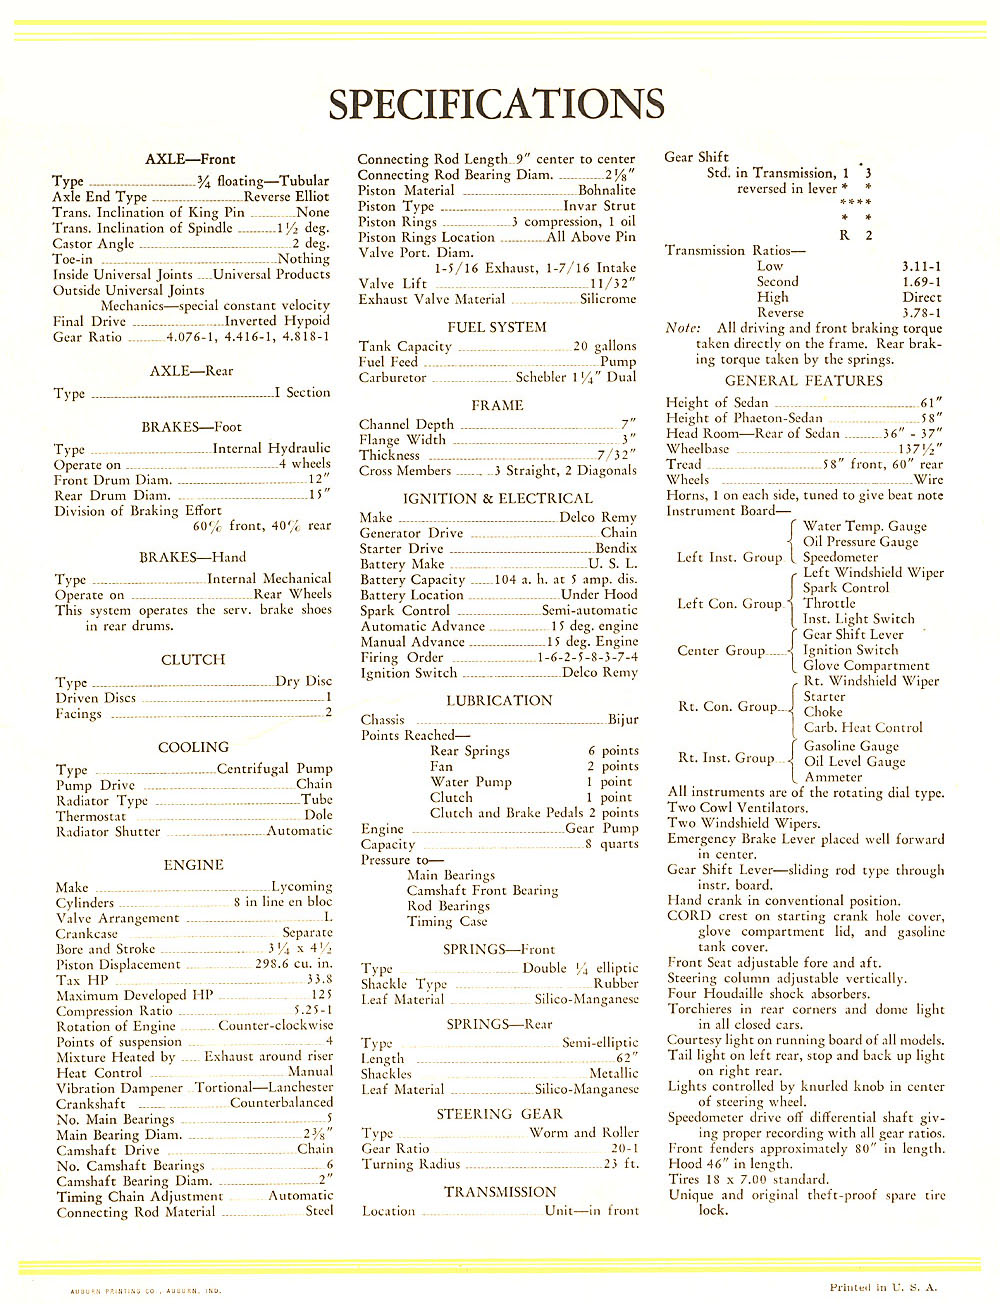 1929 Cord Catalogue-14